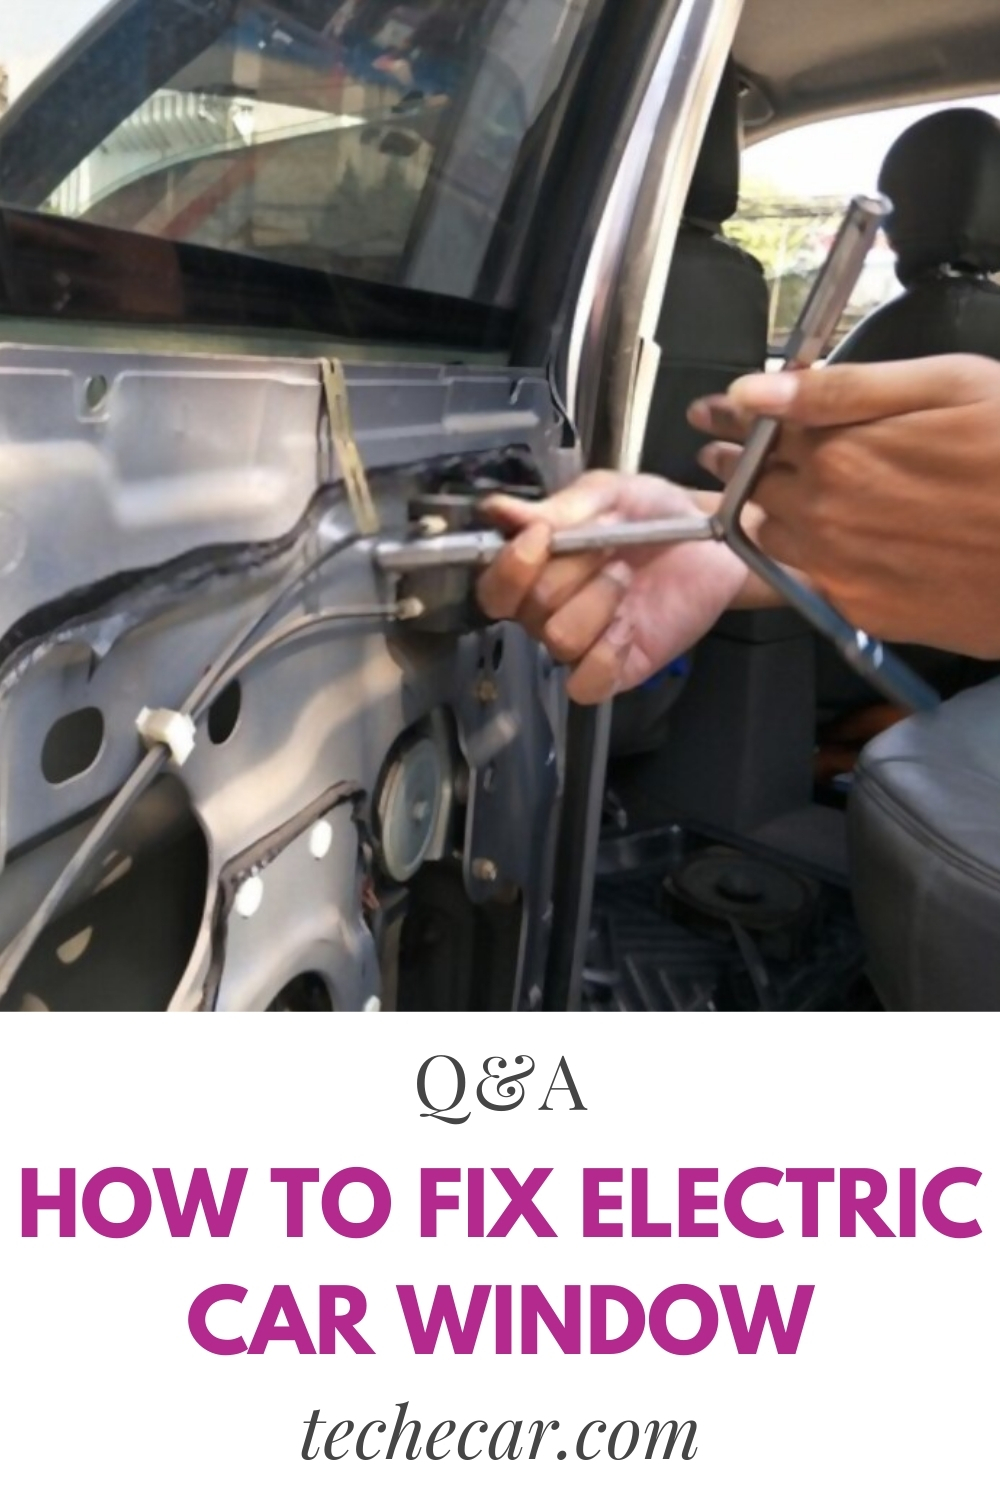 How To Fix Electric Car Window? - TECHECAR